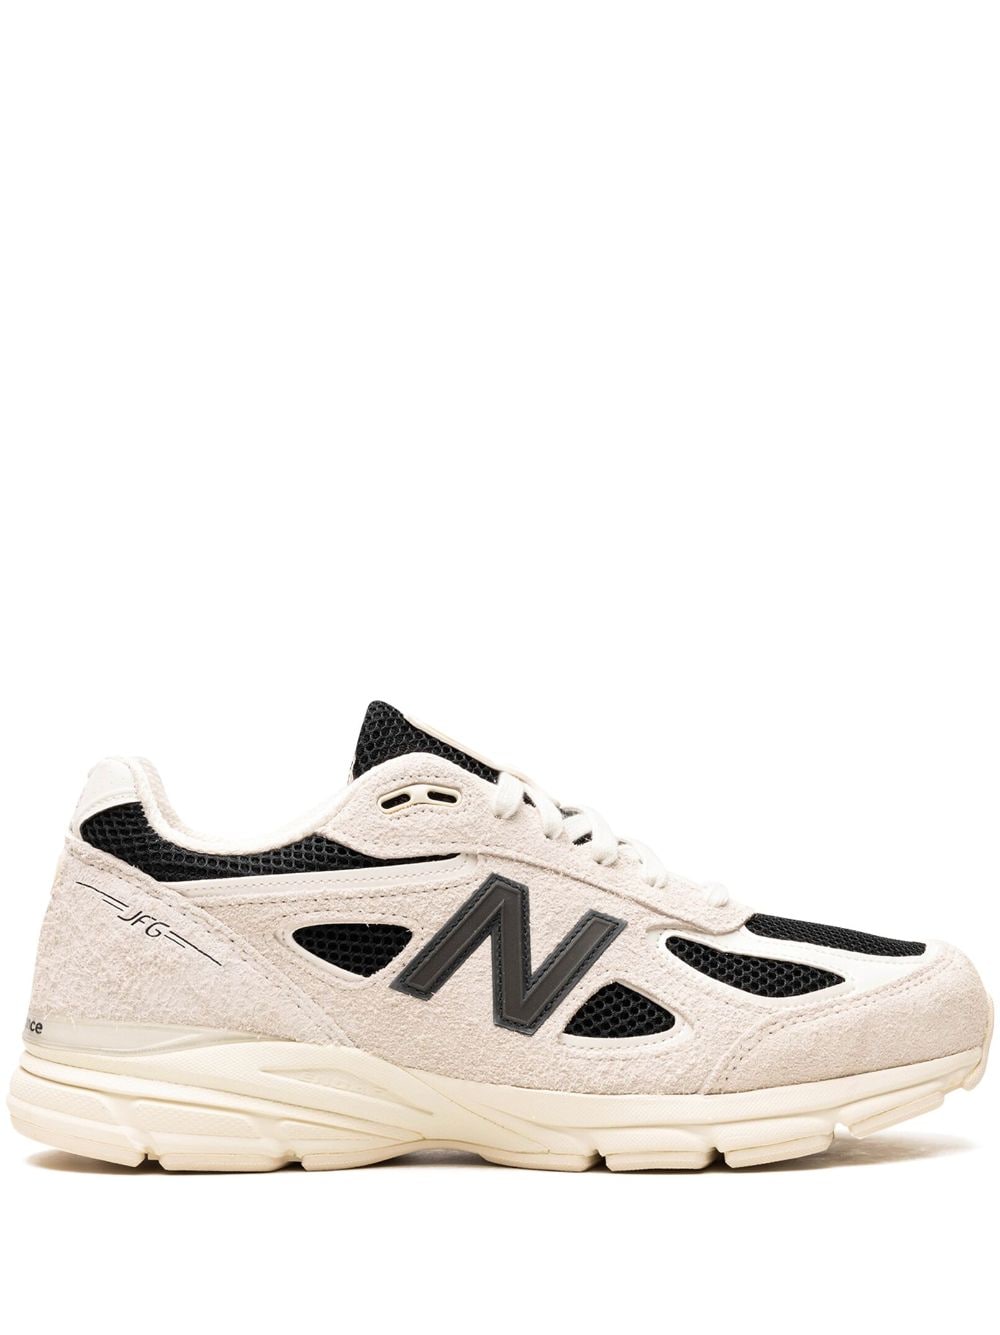 Image 1 of New Balance 990v4 "Joe Freshgoods - White" sneakers